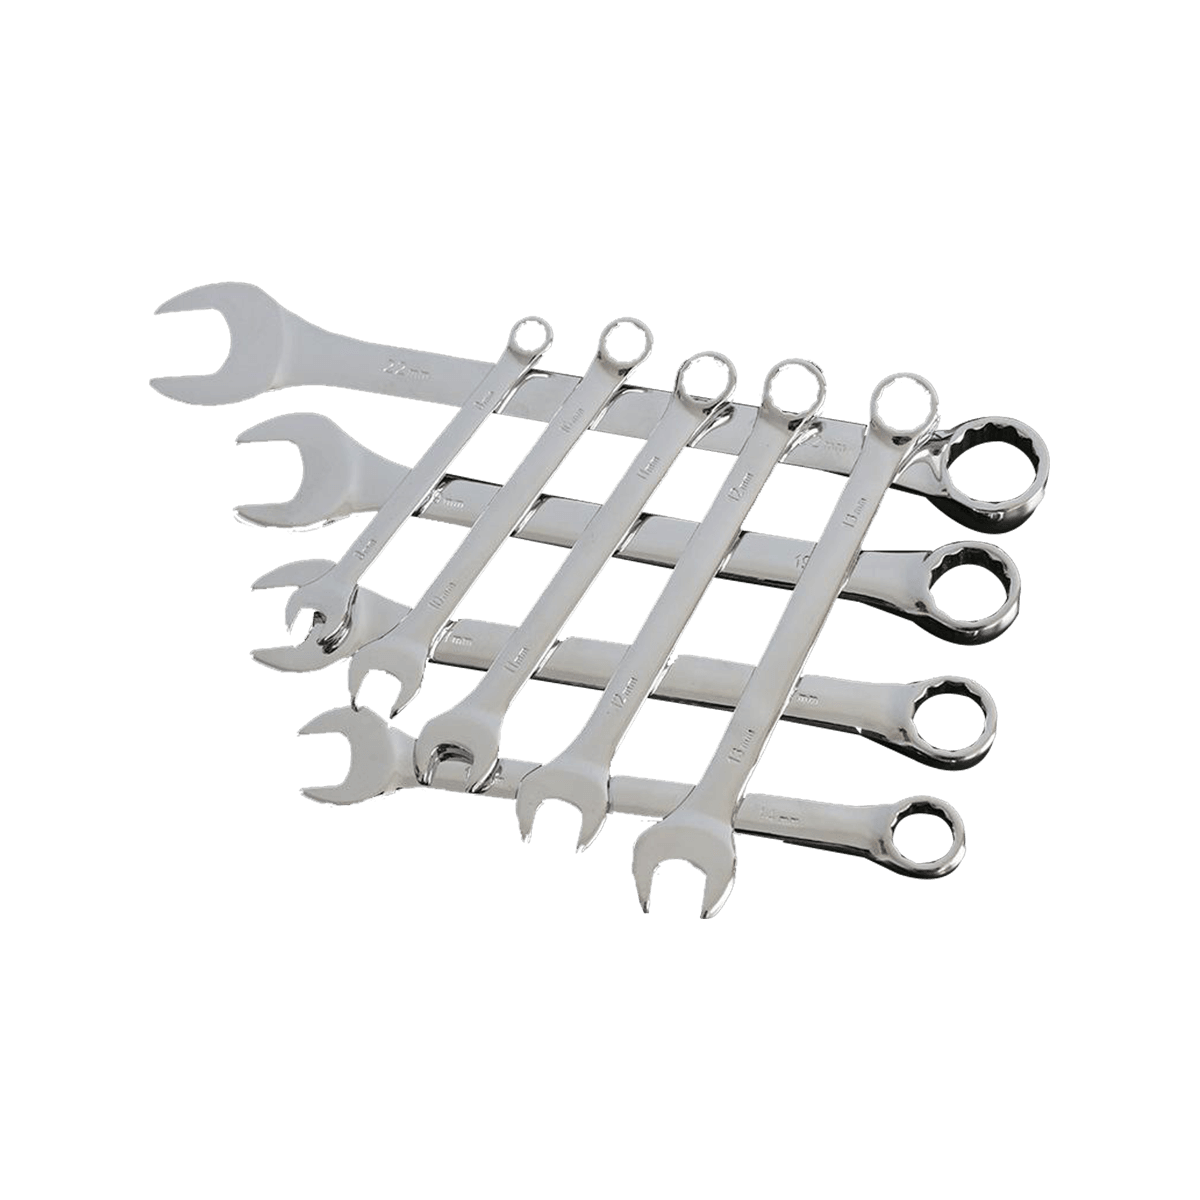 82 pçs conjunto de soquete de chave inglesa multifuncional kit de ferramentas de reparo de bicicleta conjuntos de ferramentas com caixa de sopro